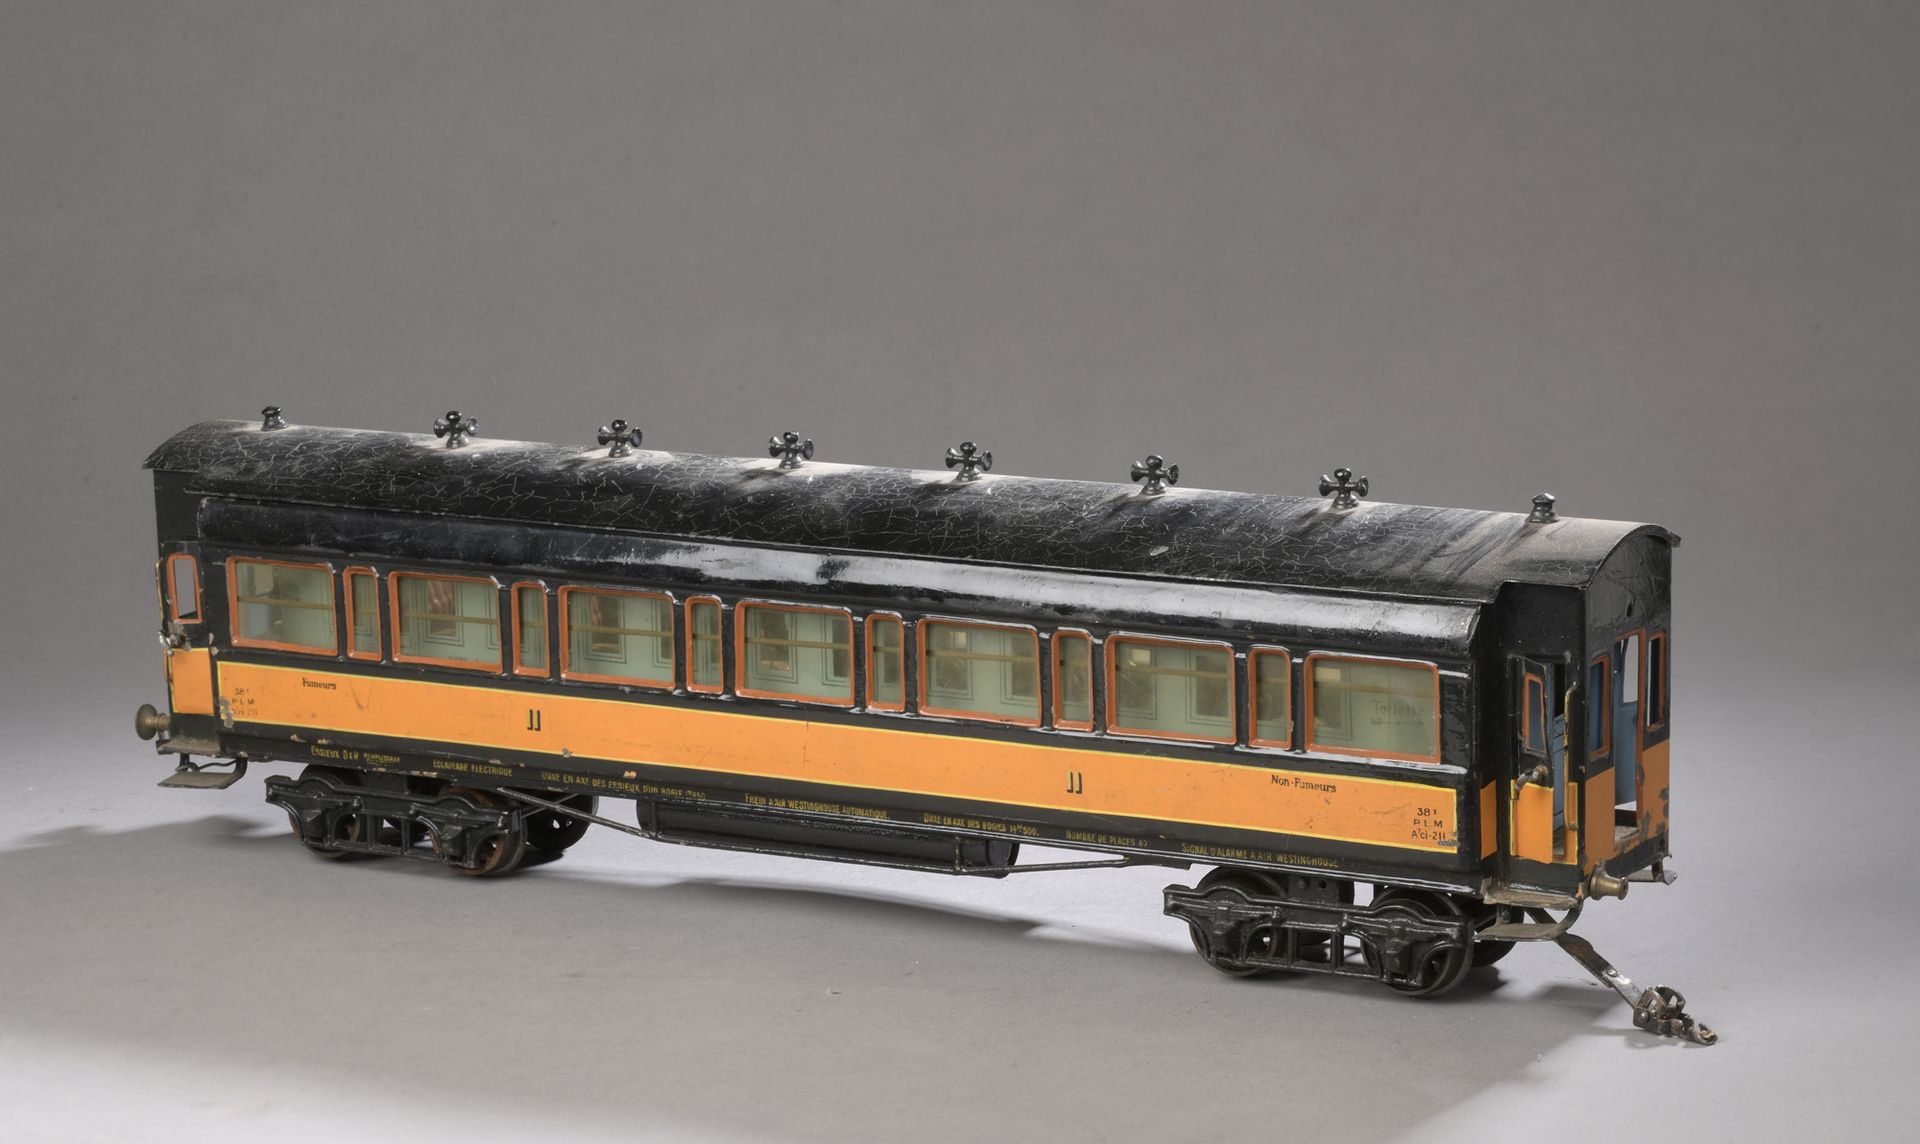 Null MARKLIN "I" - PLM二等客运车，黄色和黑色，有一个可转换的内部，有四个开门。

L. 54 cm